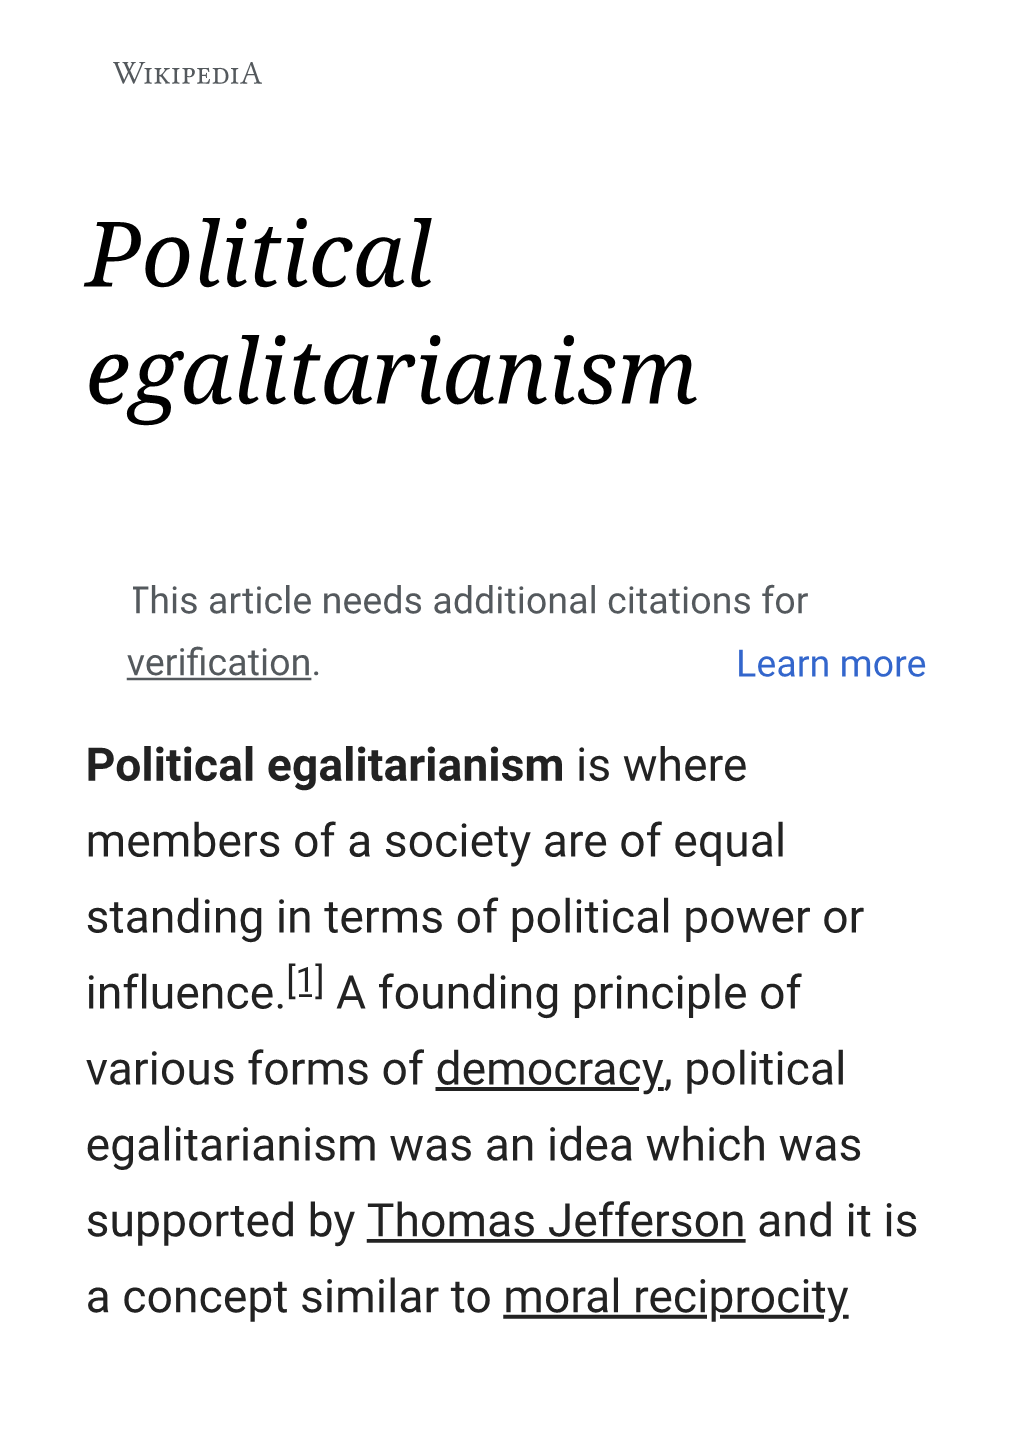 Political Egalitarianism